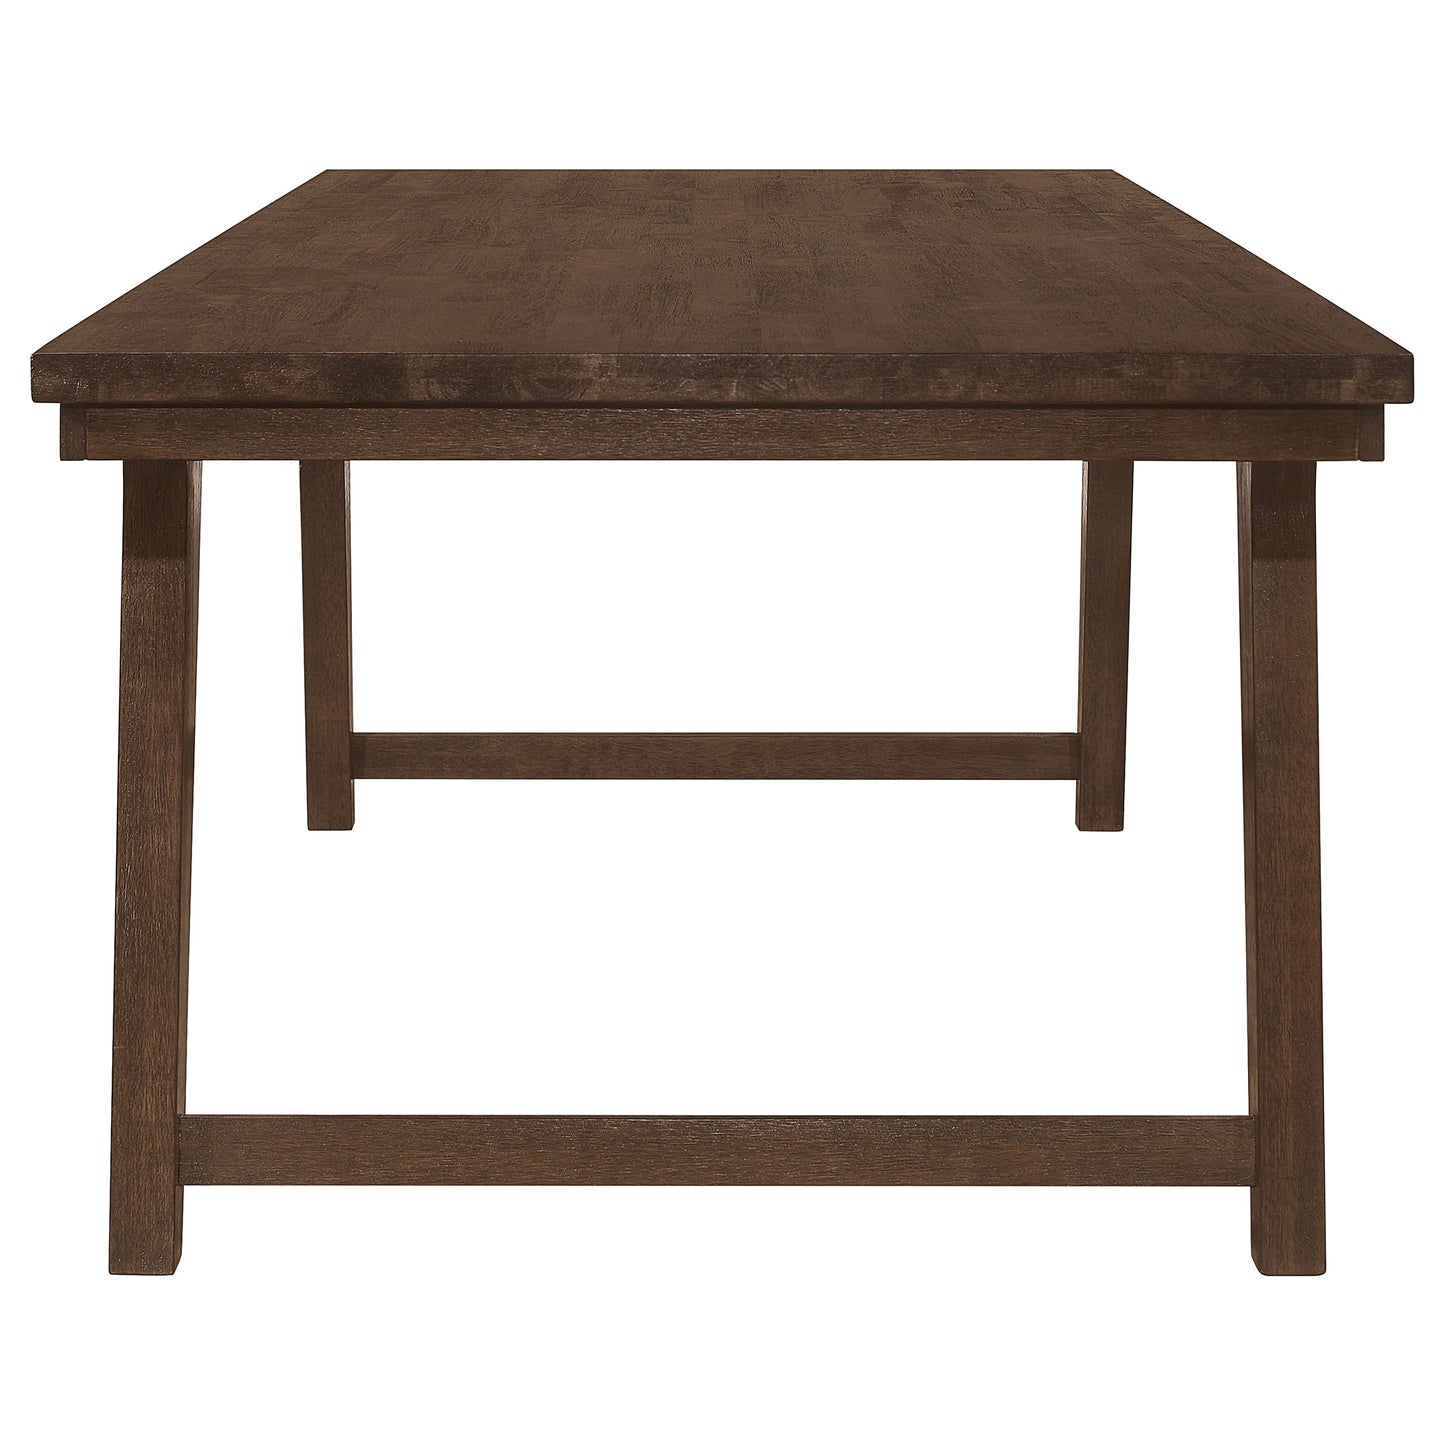 Reynolds 6-piece Rectangular Dining Table Set Brown Oak